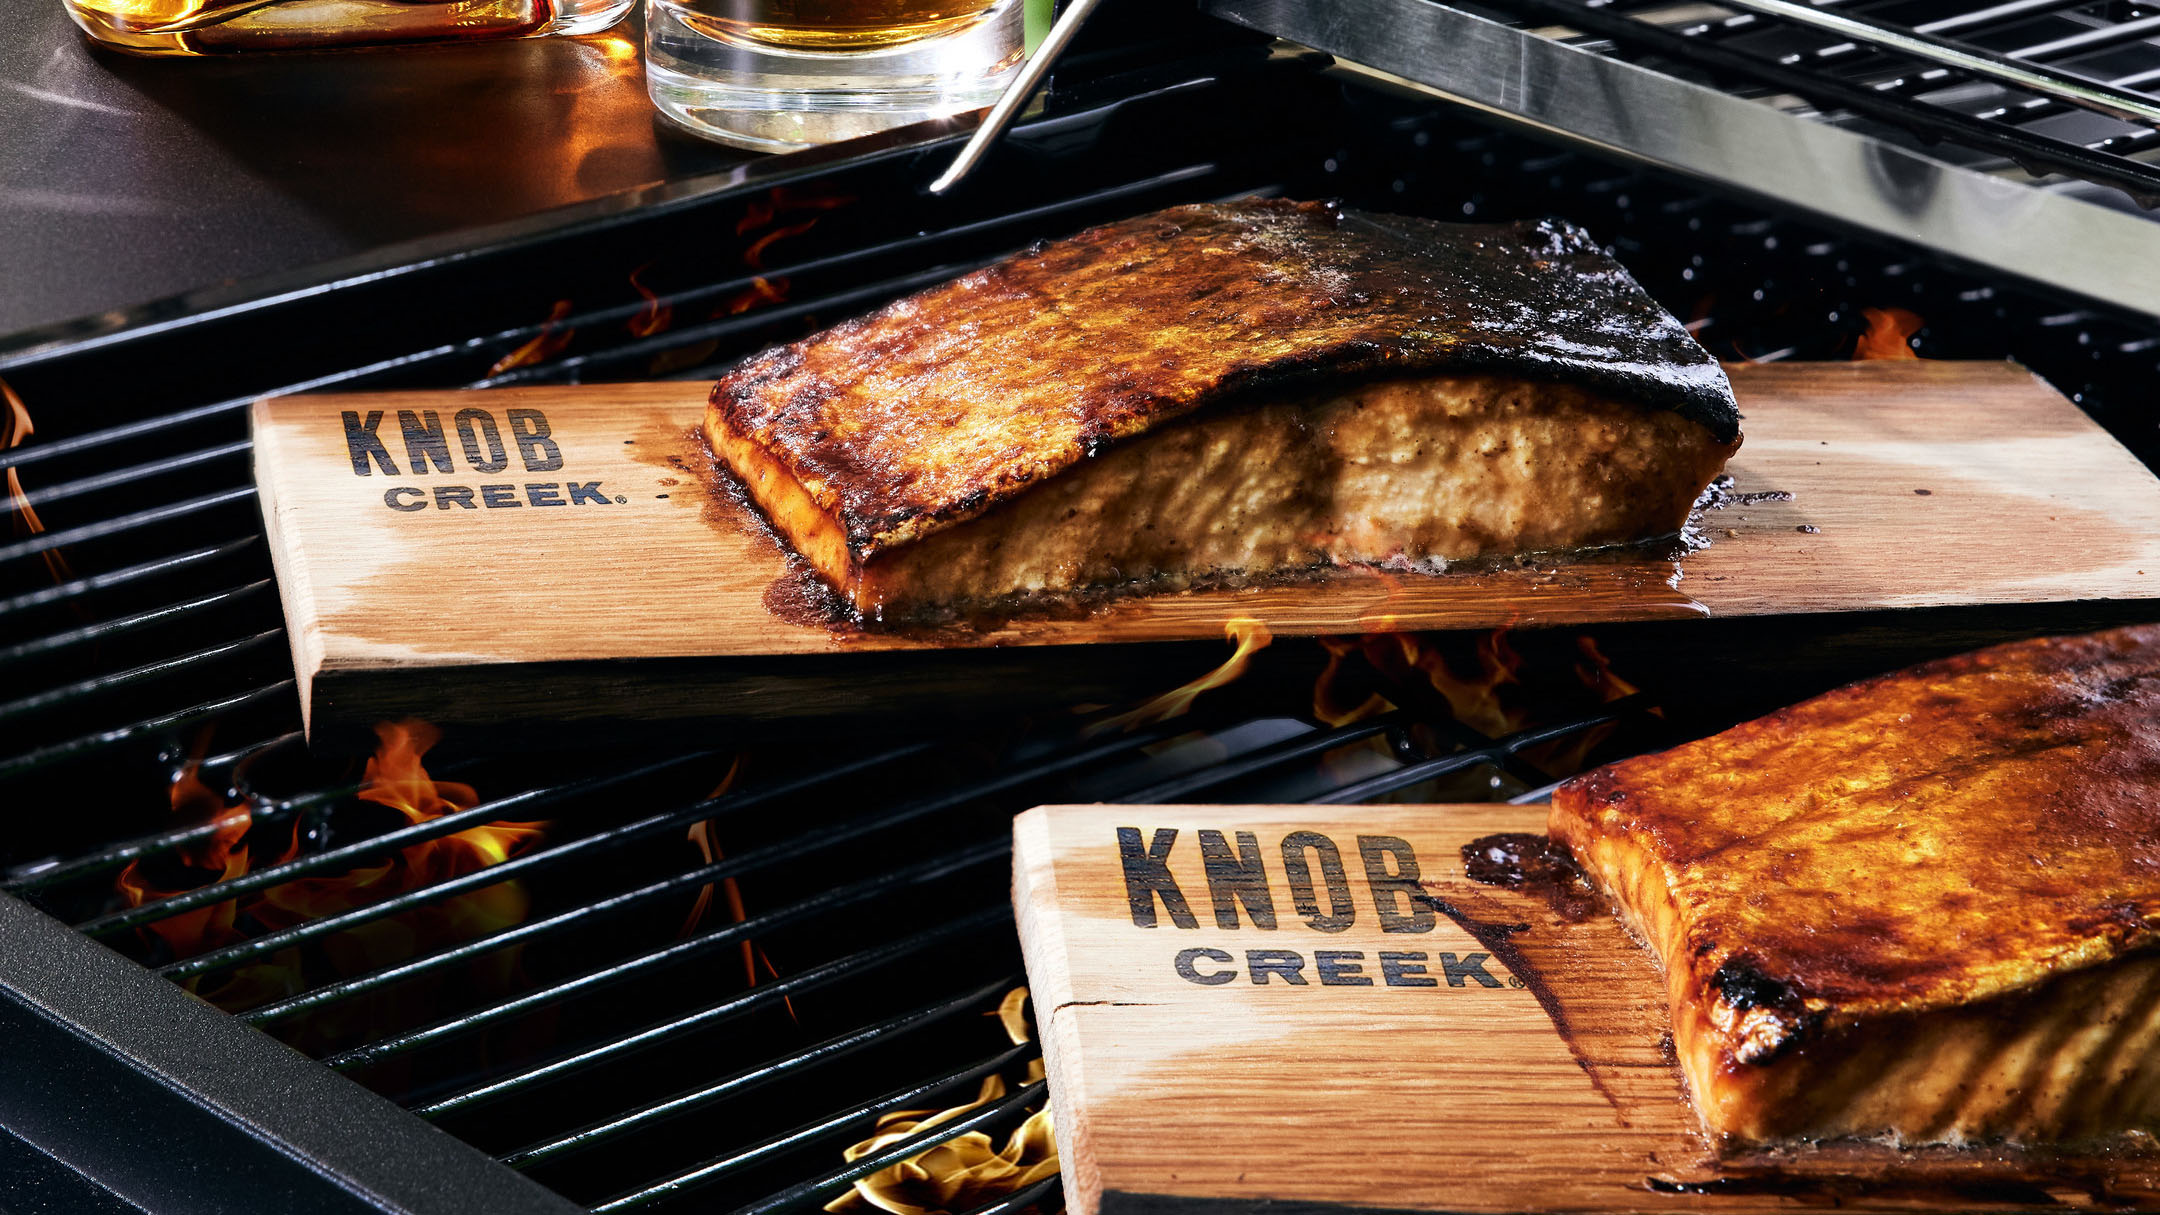 Knob Creek grilling planks